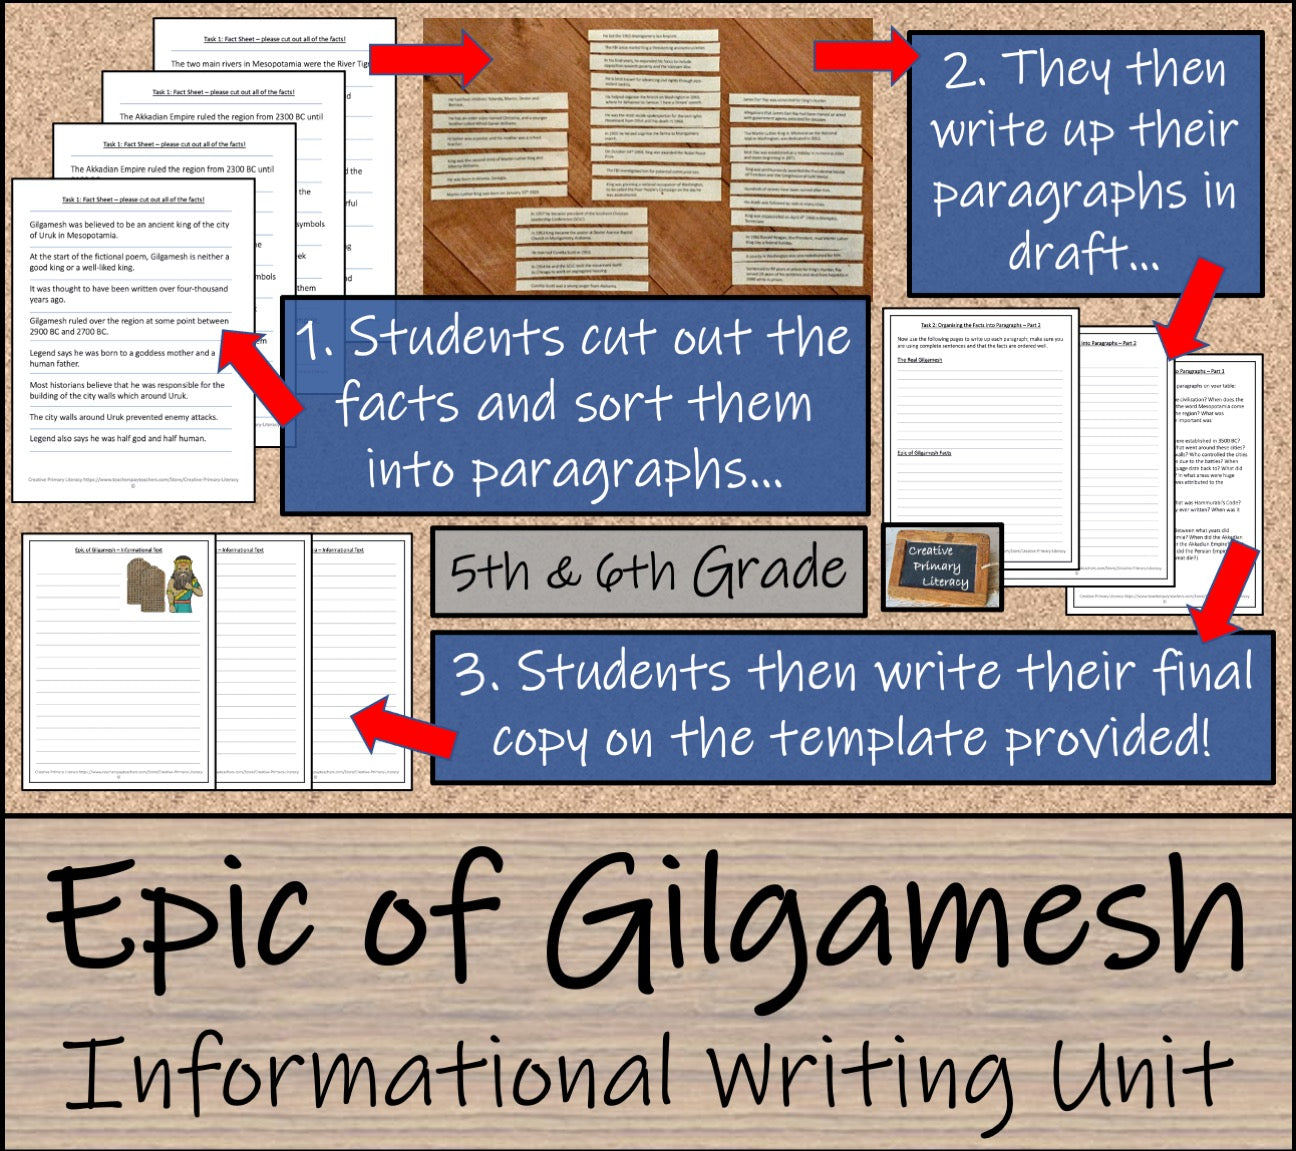 Epic of Gilgamesh Informational Writing Unit | 3rd Grade & 4th Grade